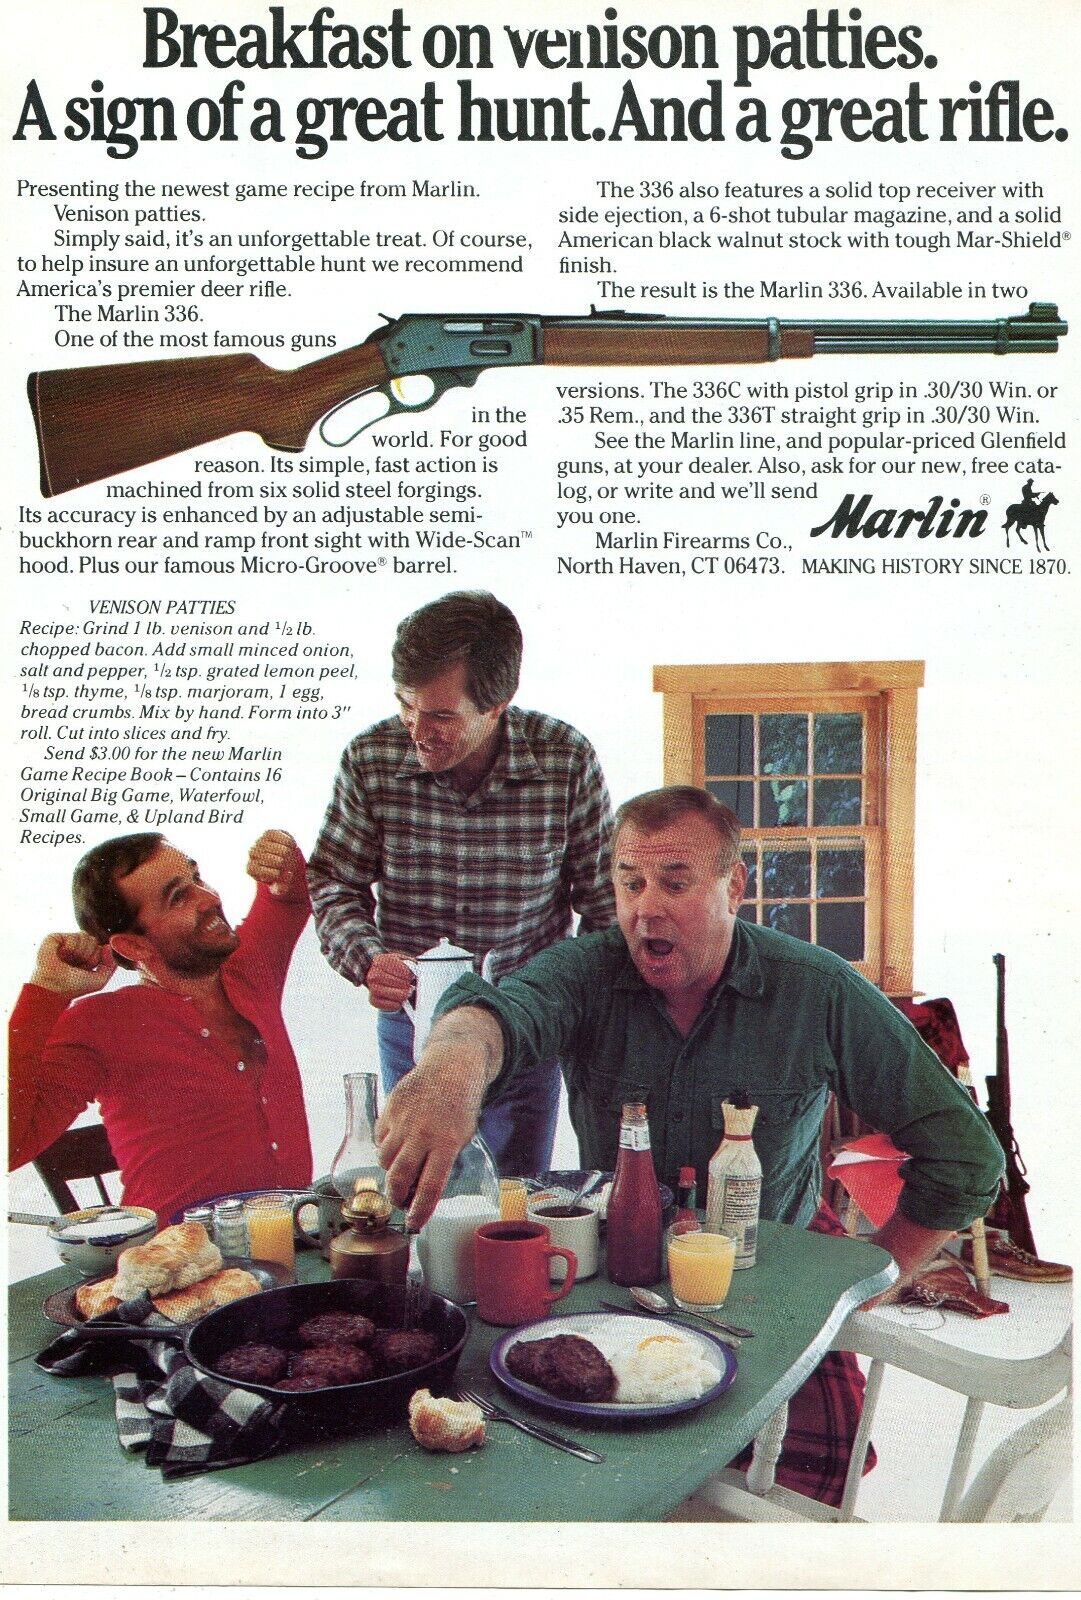 1981 Print Ad of Marlin 336 Deer Rifle venison patties recipe